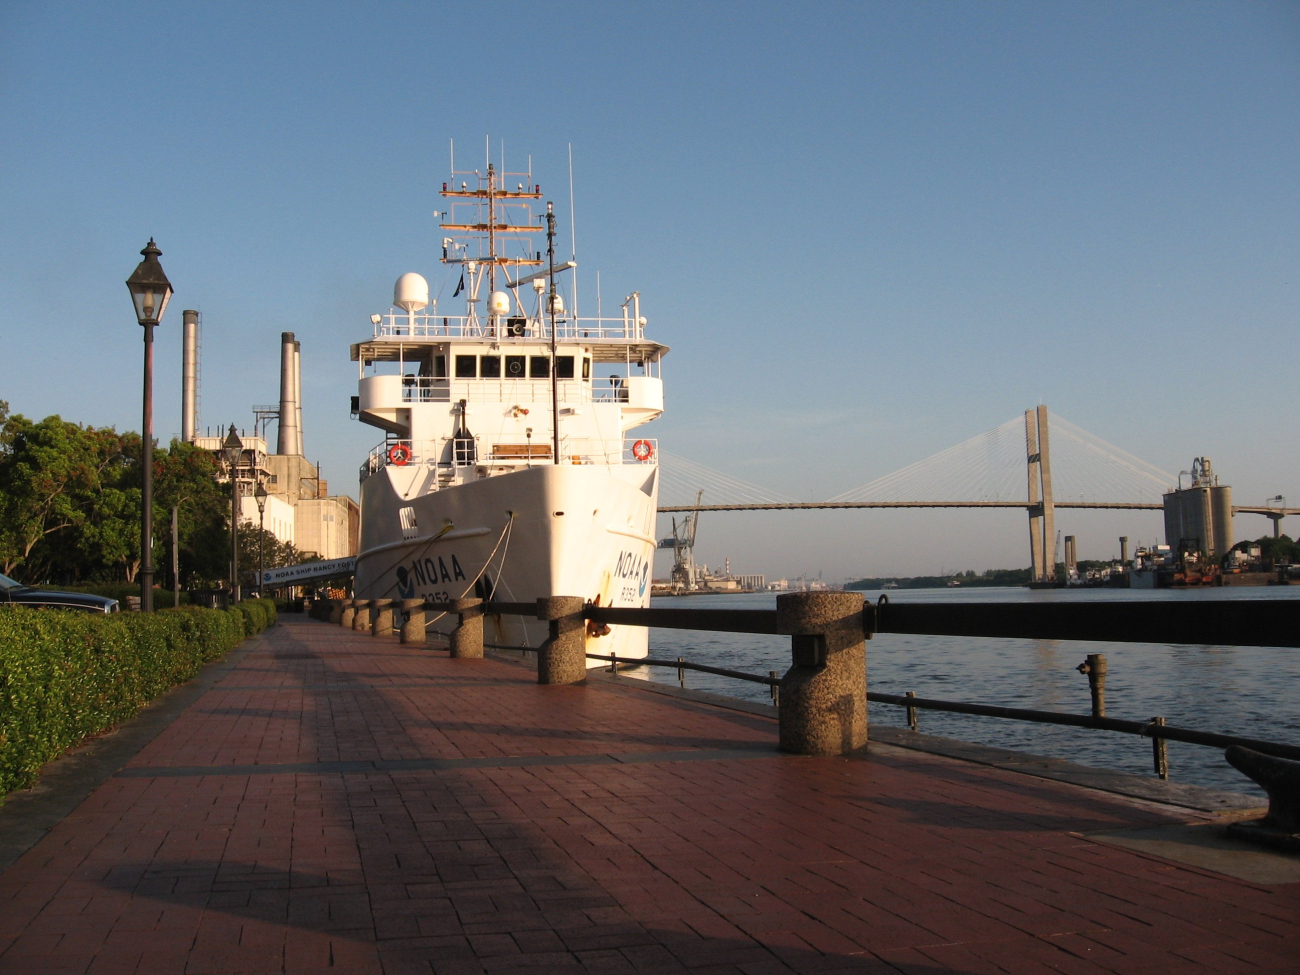 NOAA Ship NANCY FOSTER tied up along the Savannah waterfront